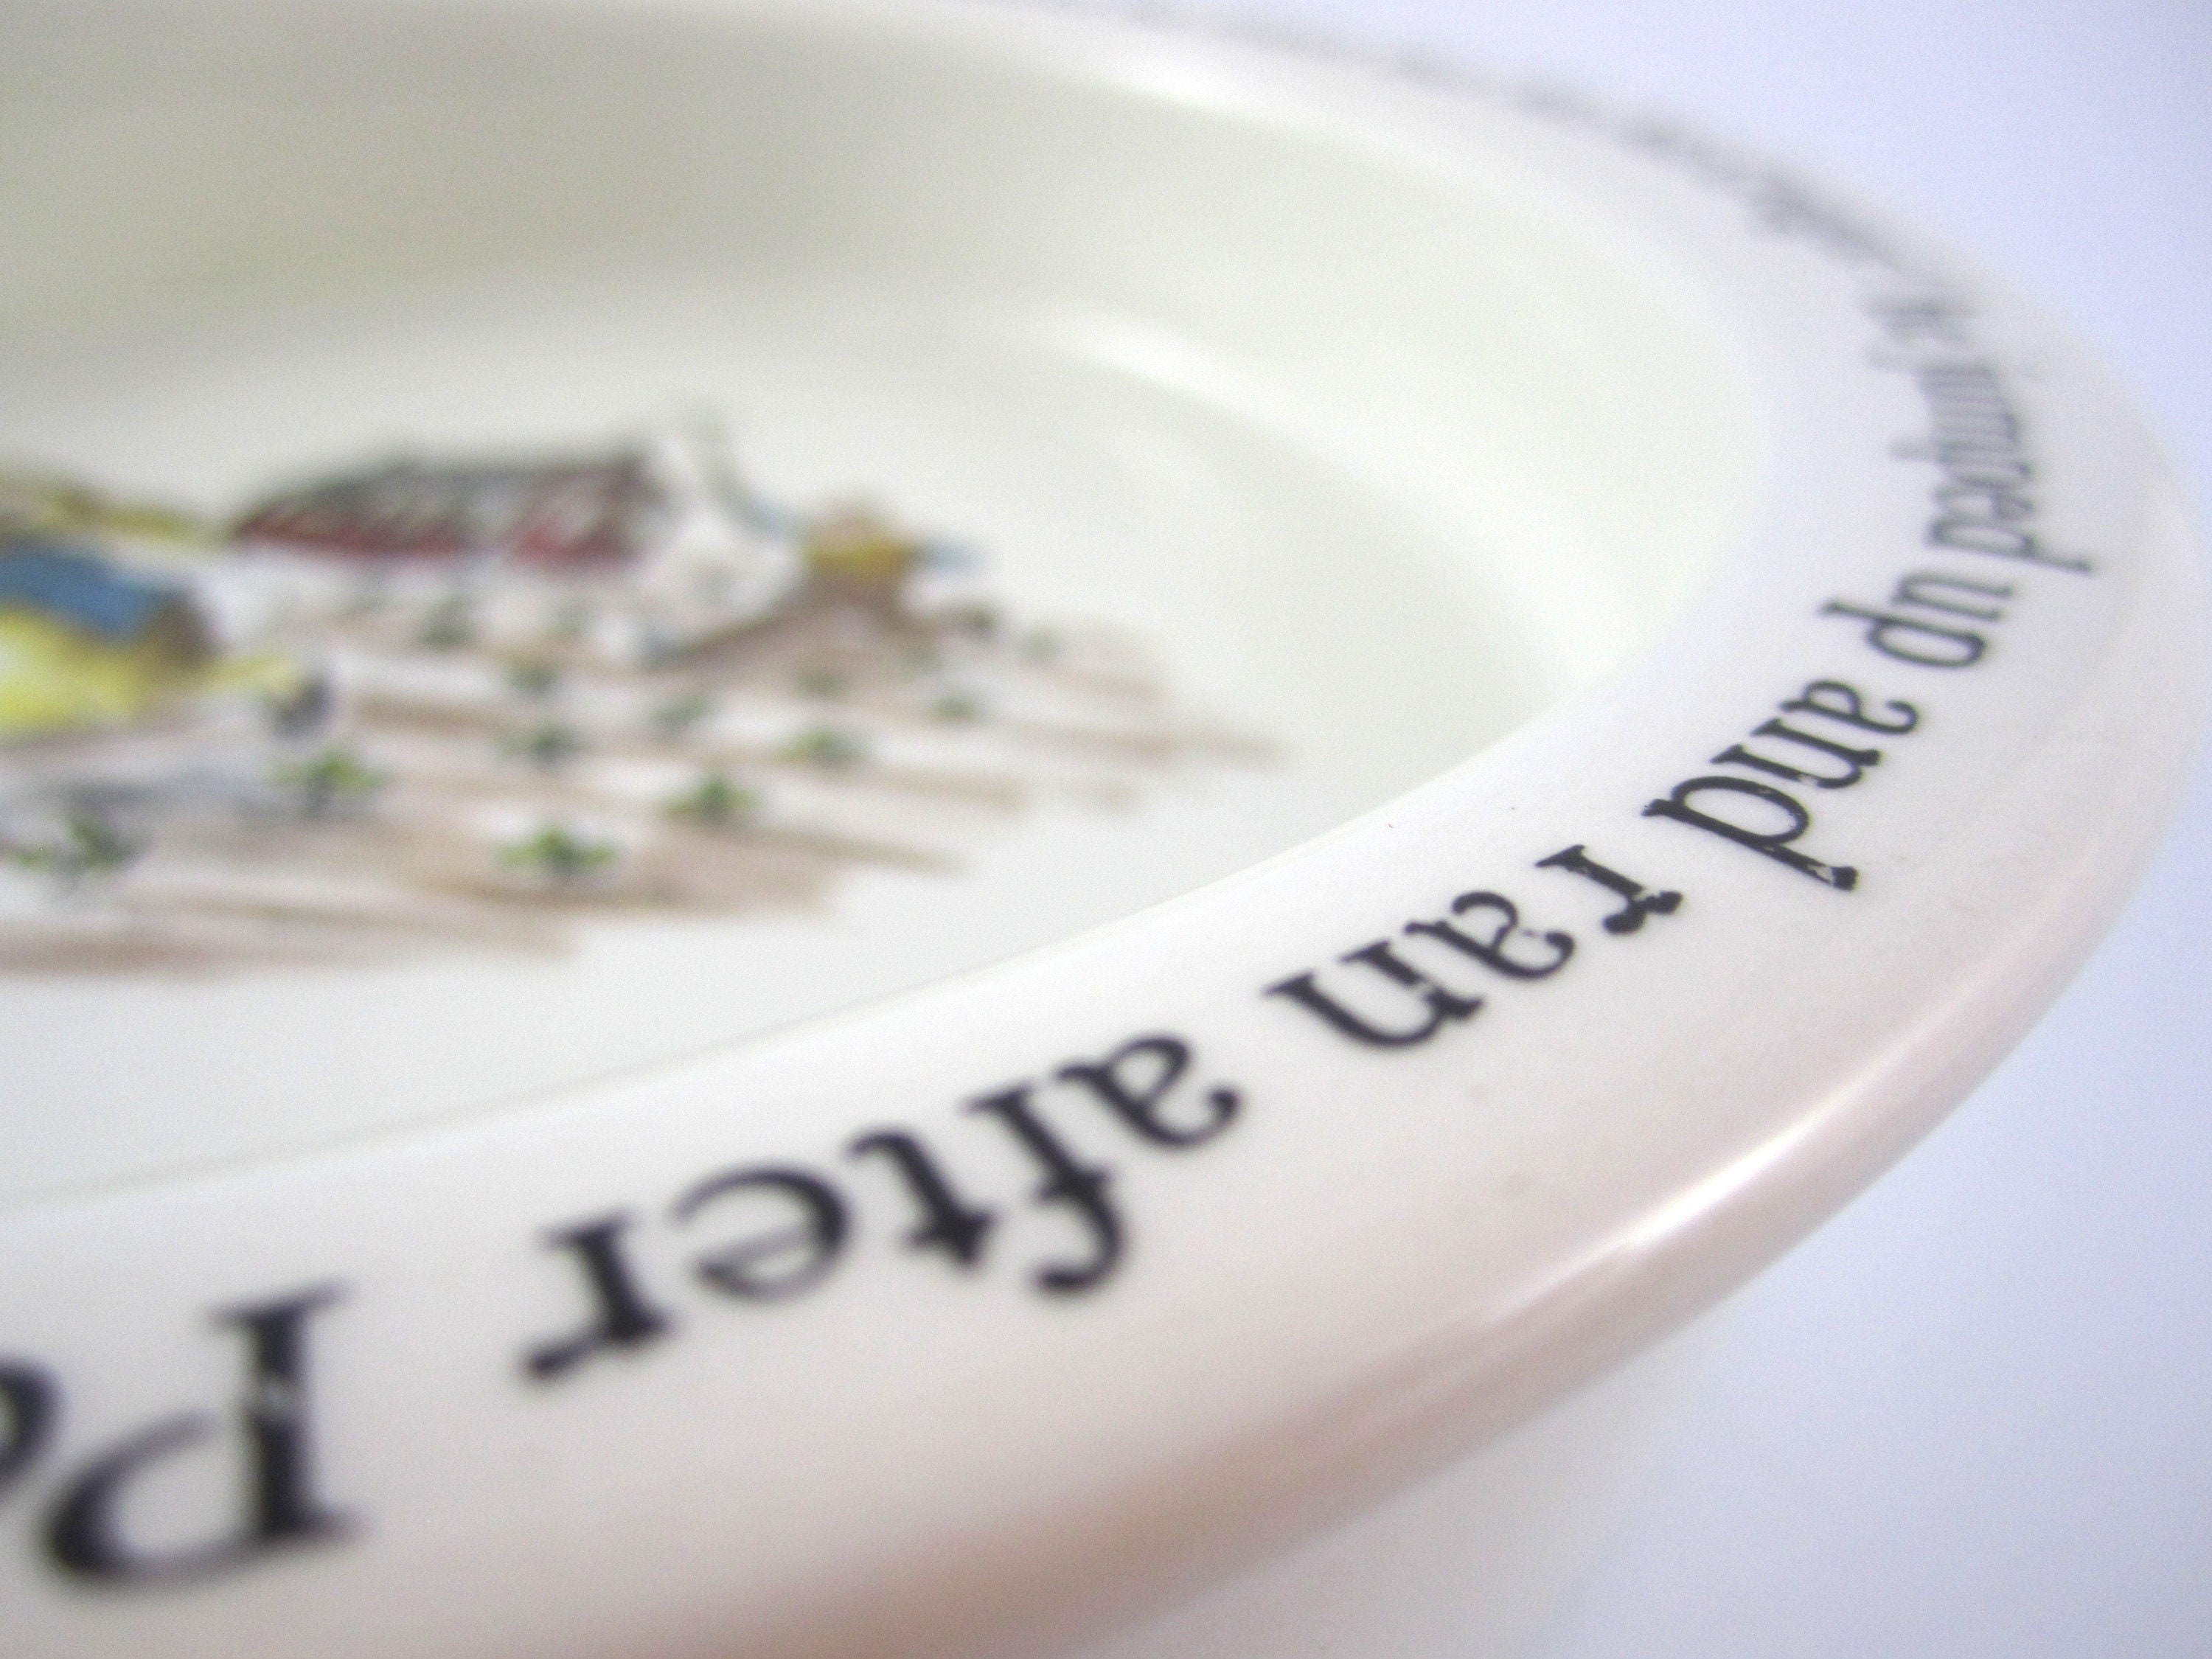 Beatrix Potter™ Bowl, Easter Table Decor